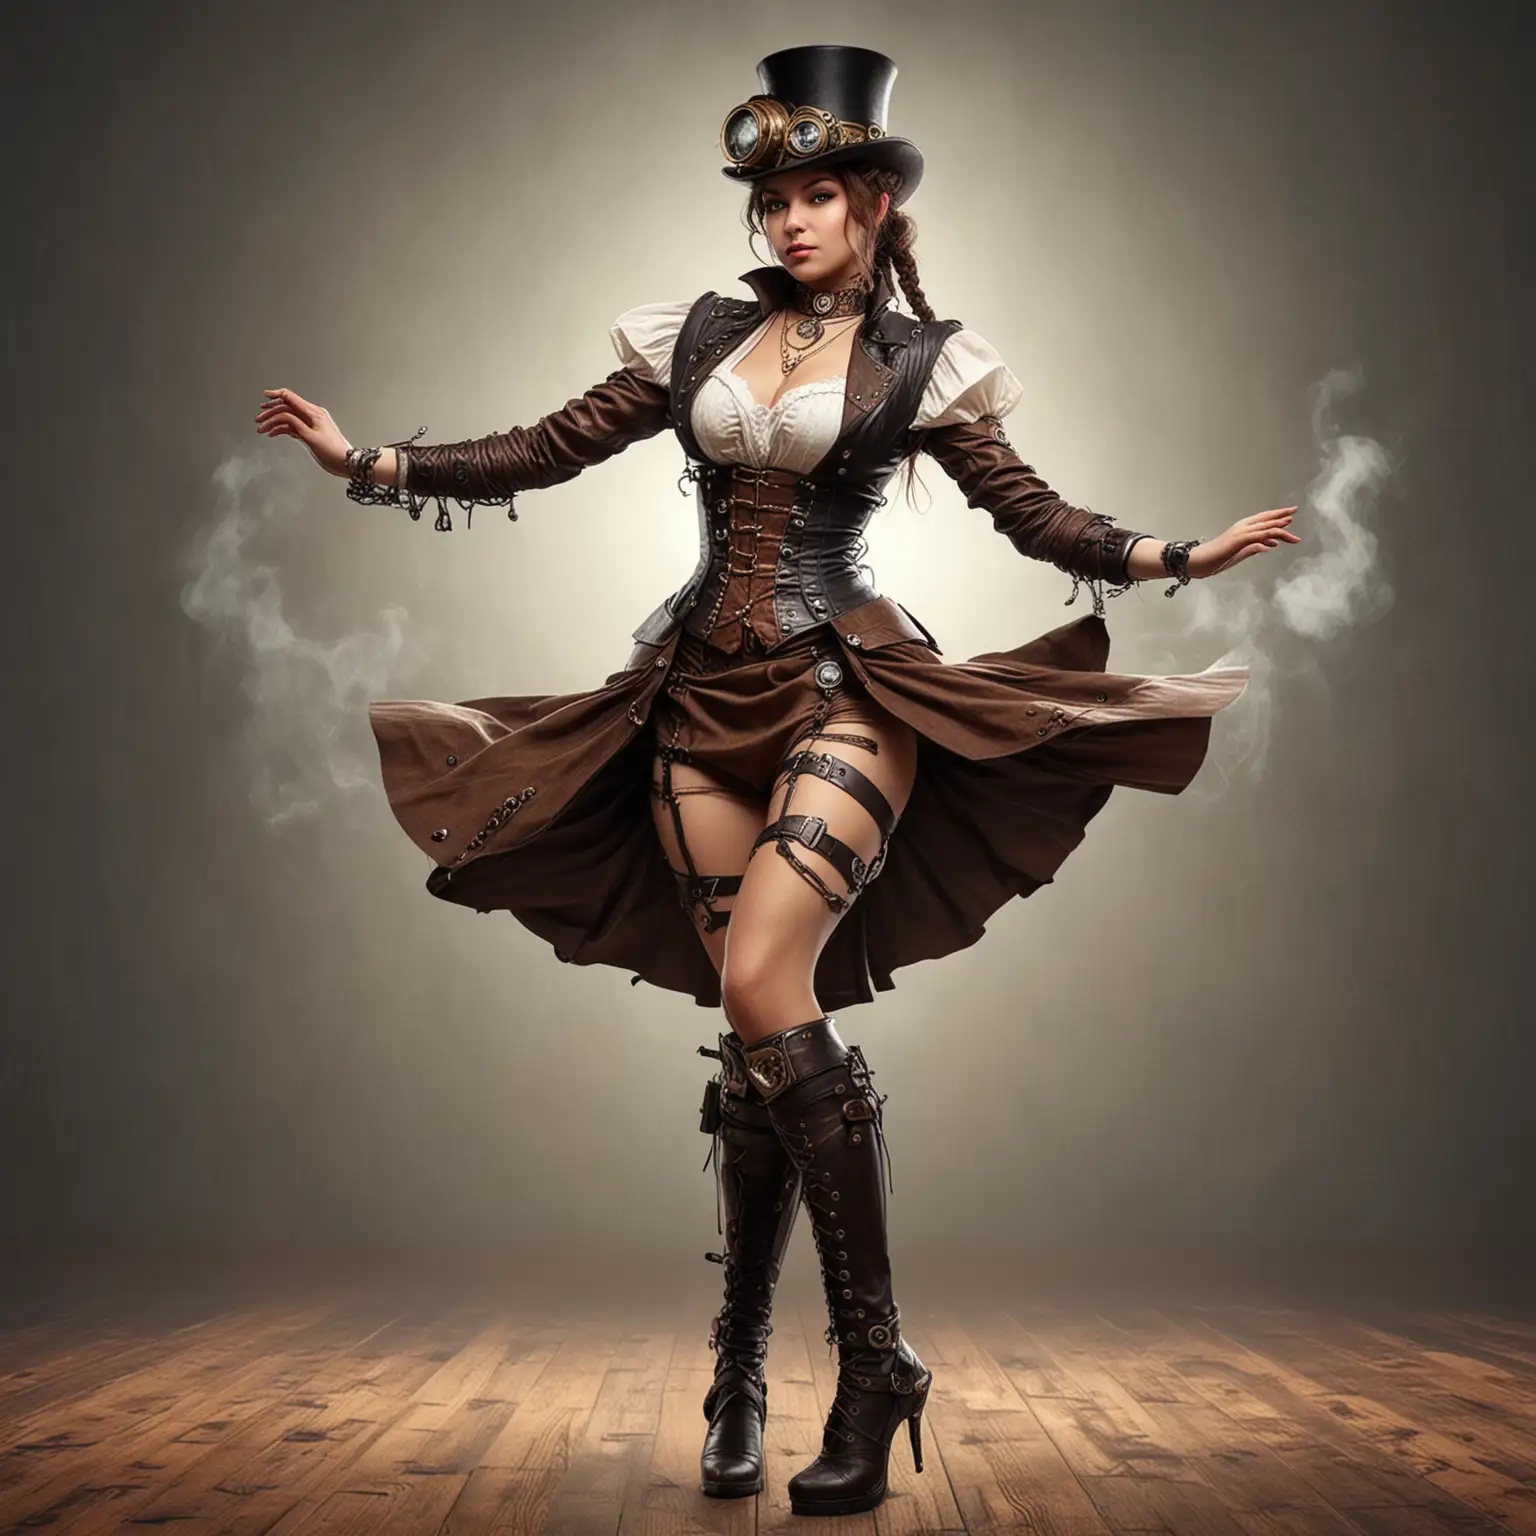 Elegant Steampunk Woman Dancing in Realistic Style